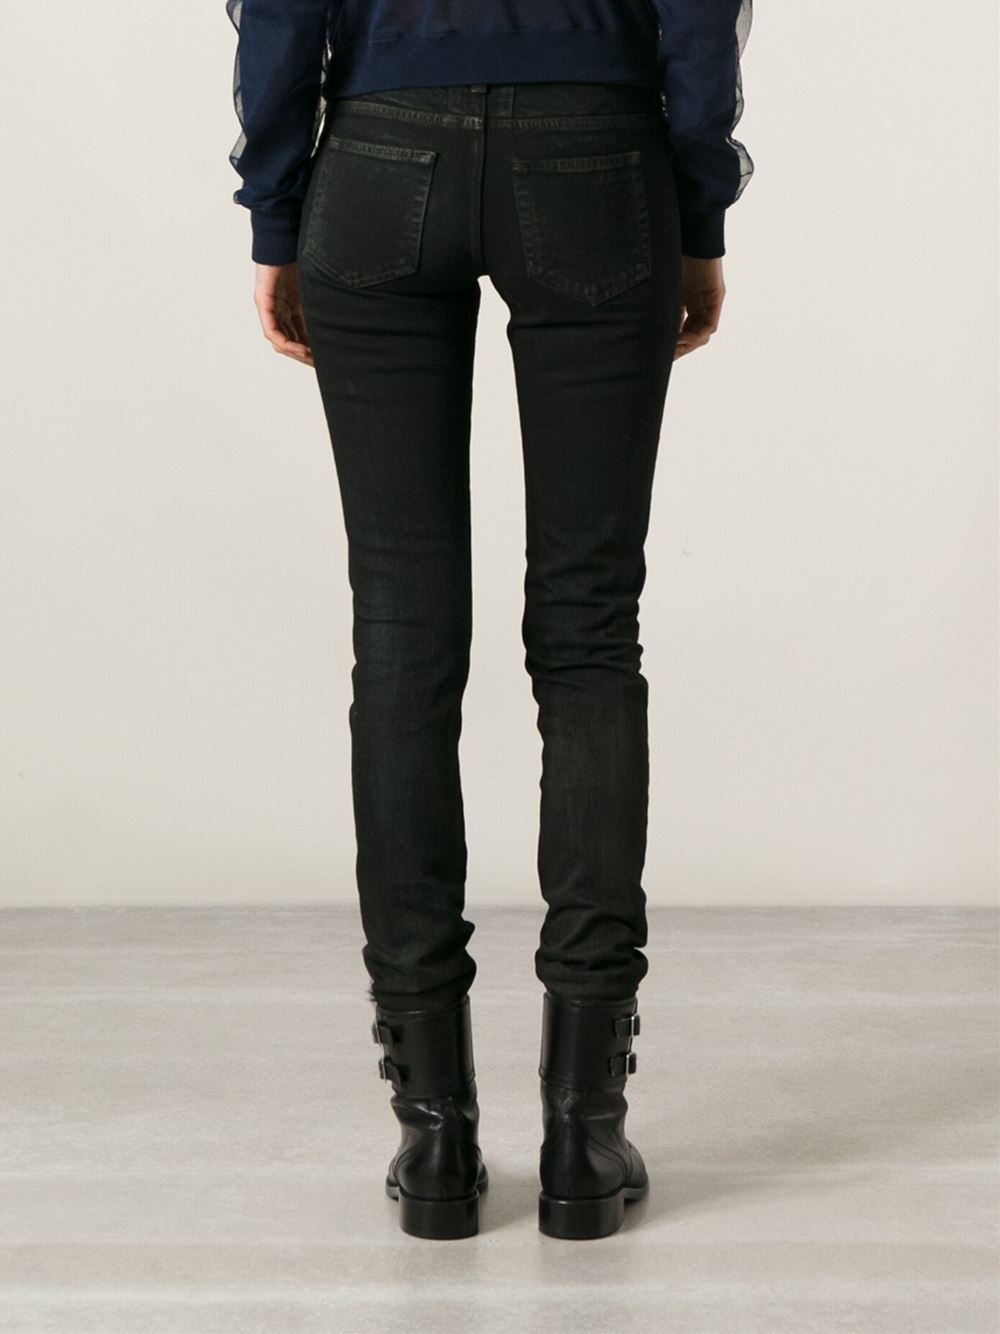 Lyst - Saint laurent Distressed Skinny Jeans in Black